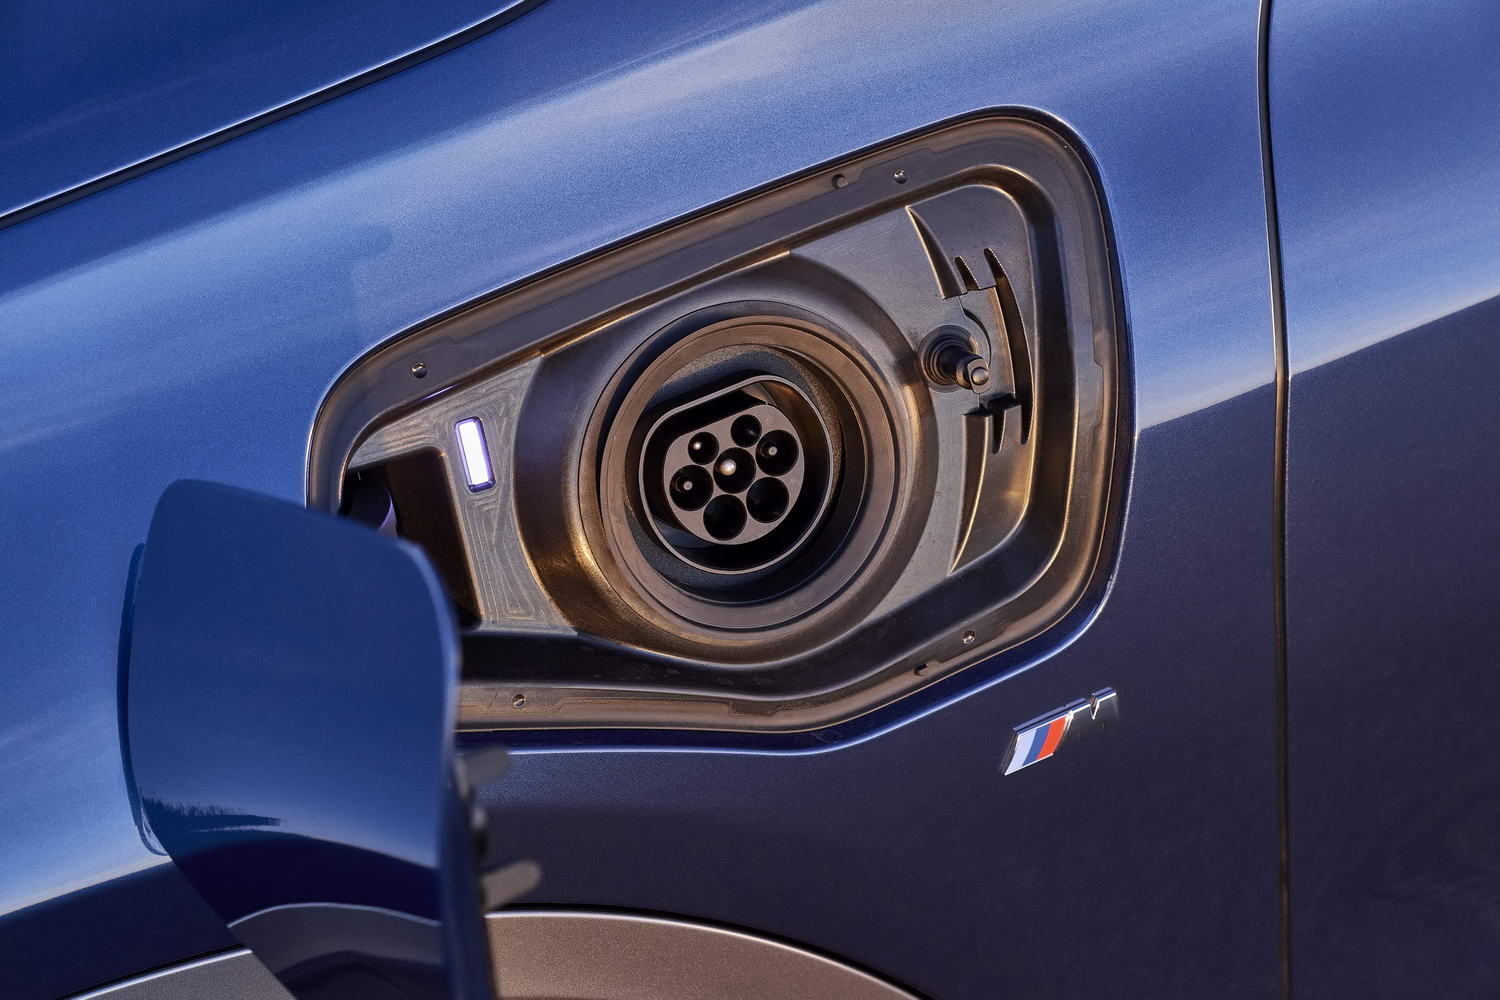 Hybrid leads revised BMW X2 range